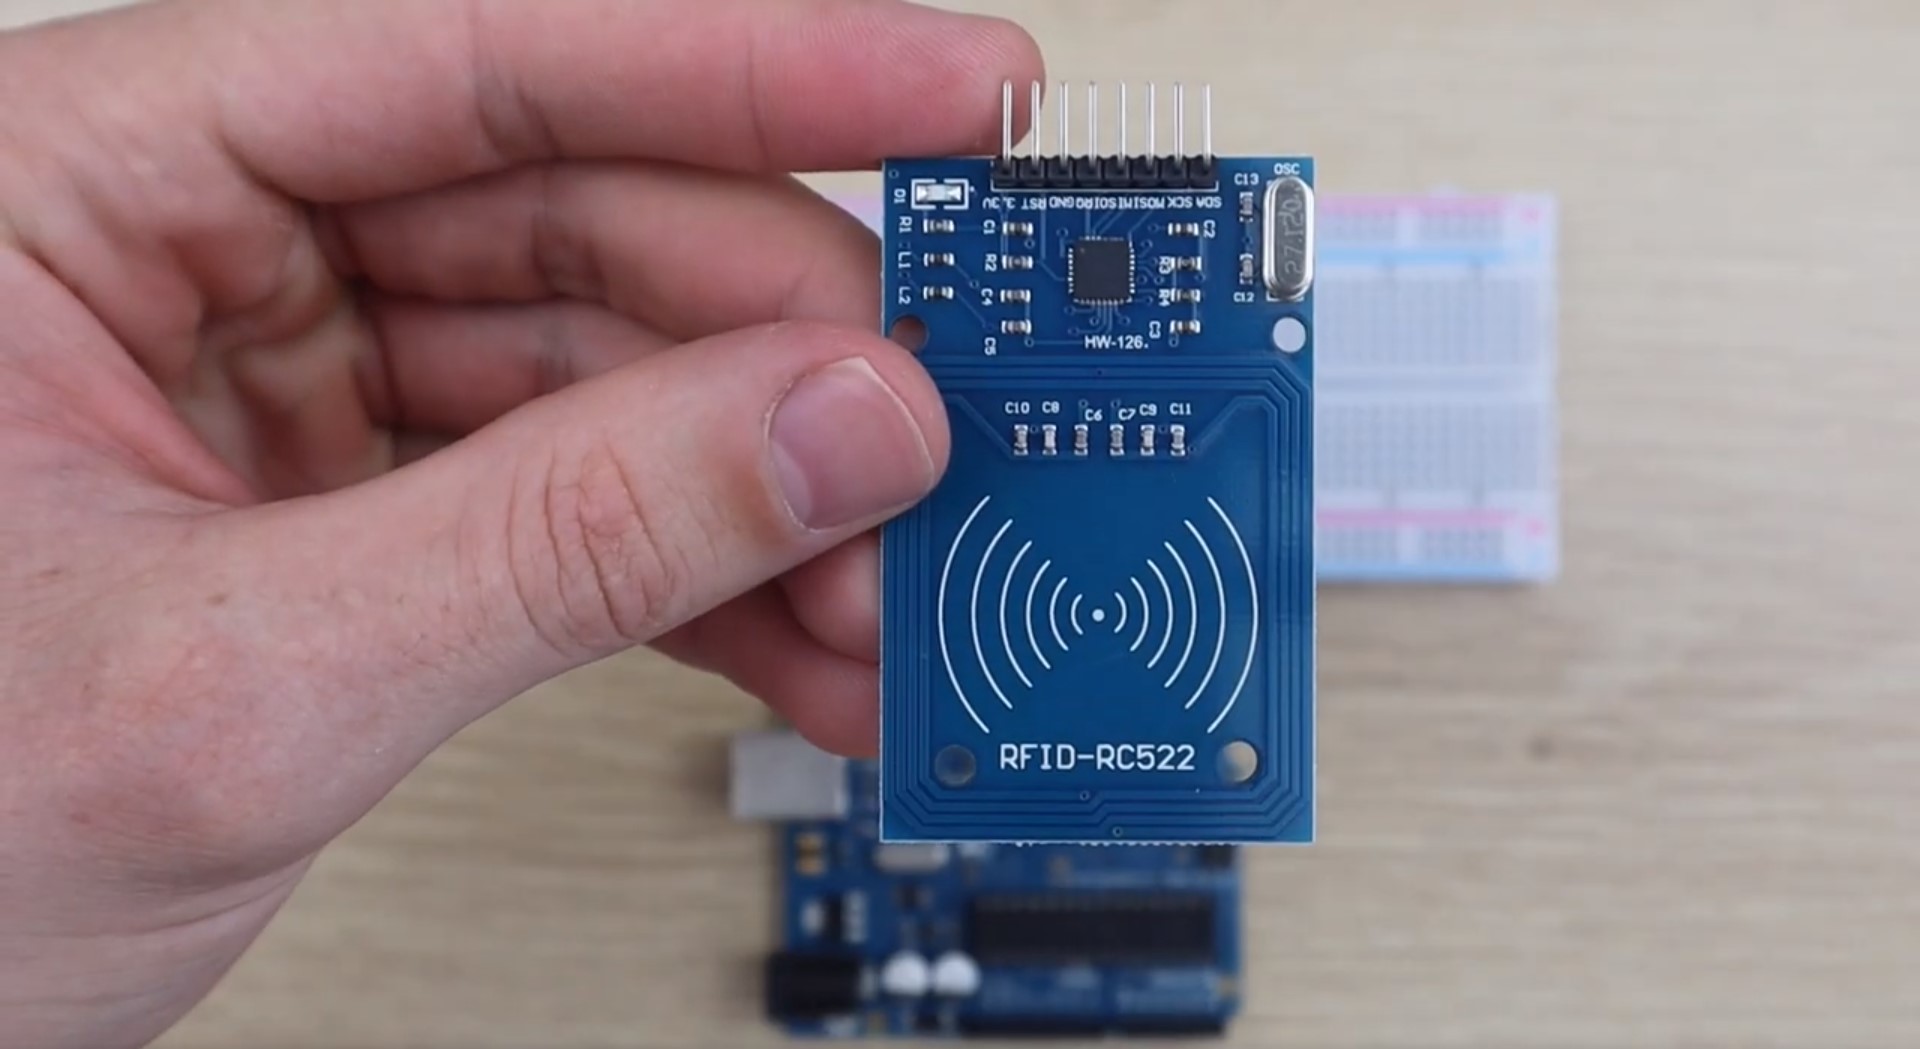 RC522 Sensor Connection To Arduino